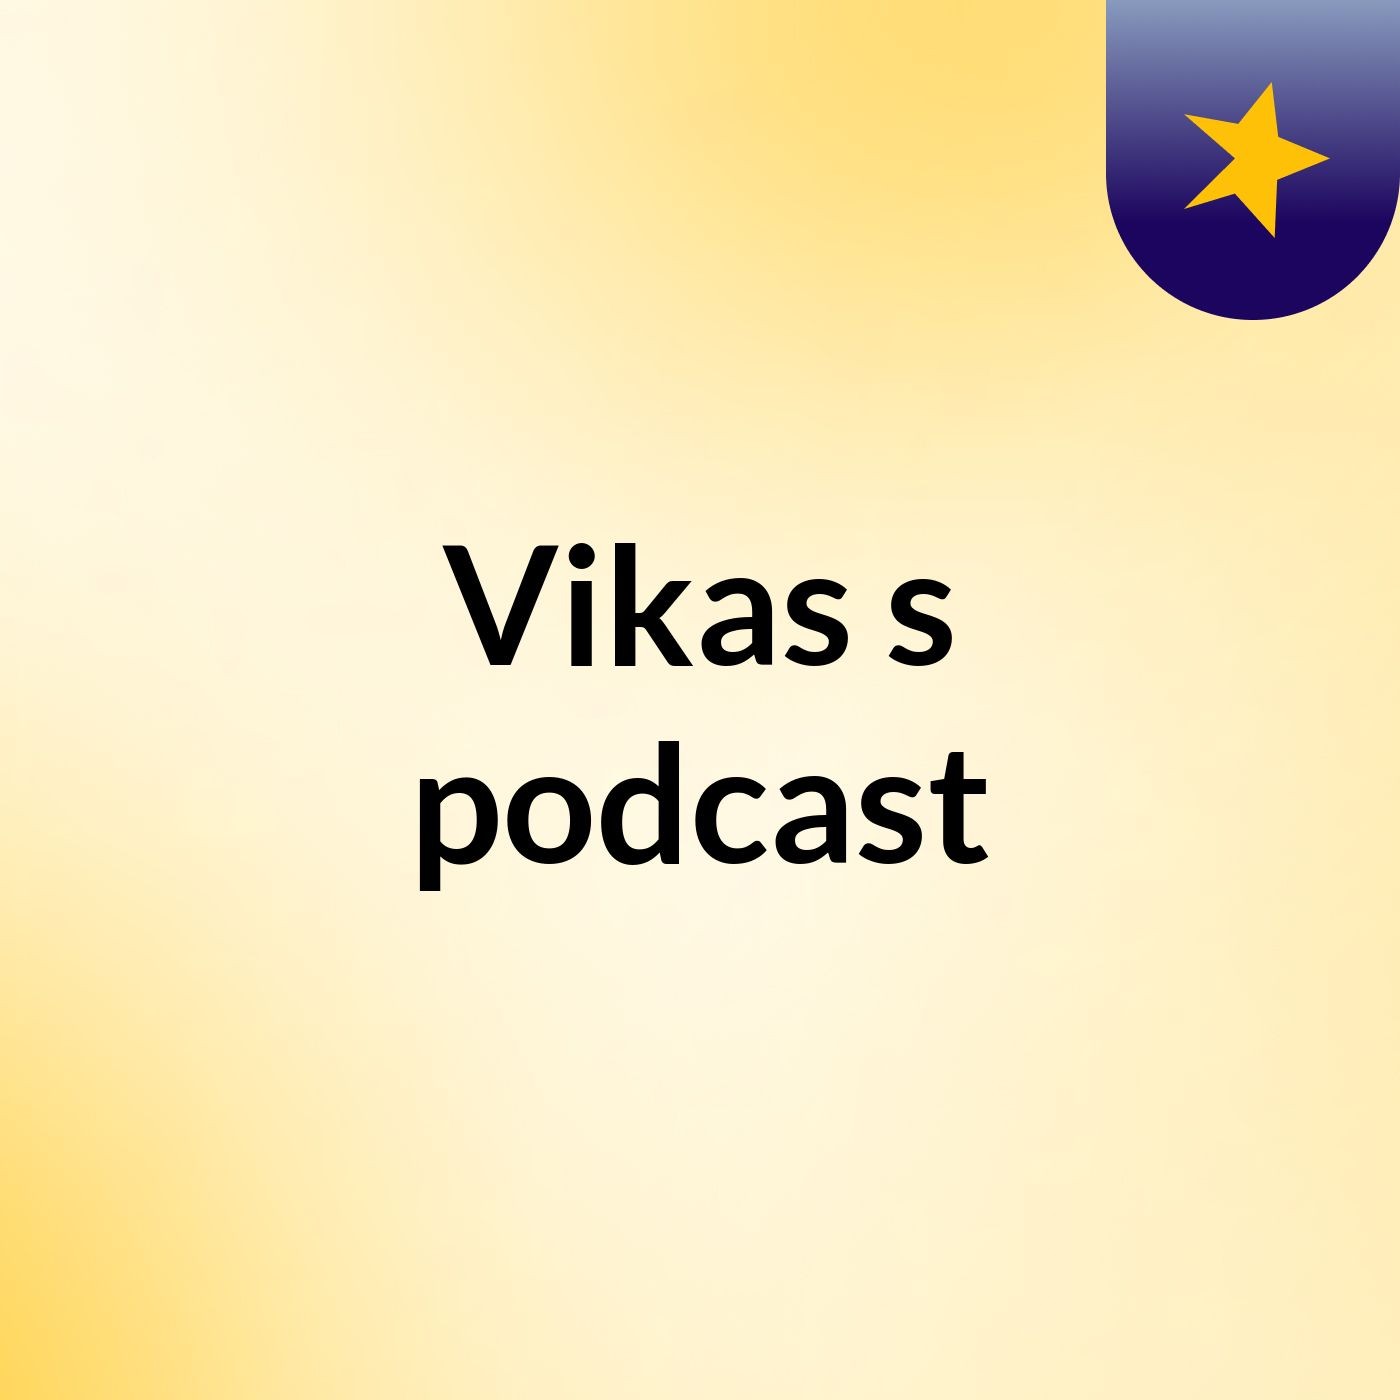 Vikas's podcast